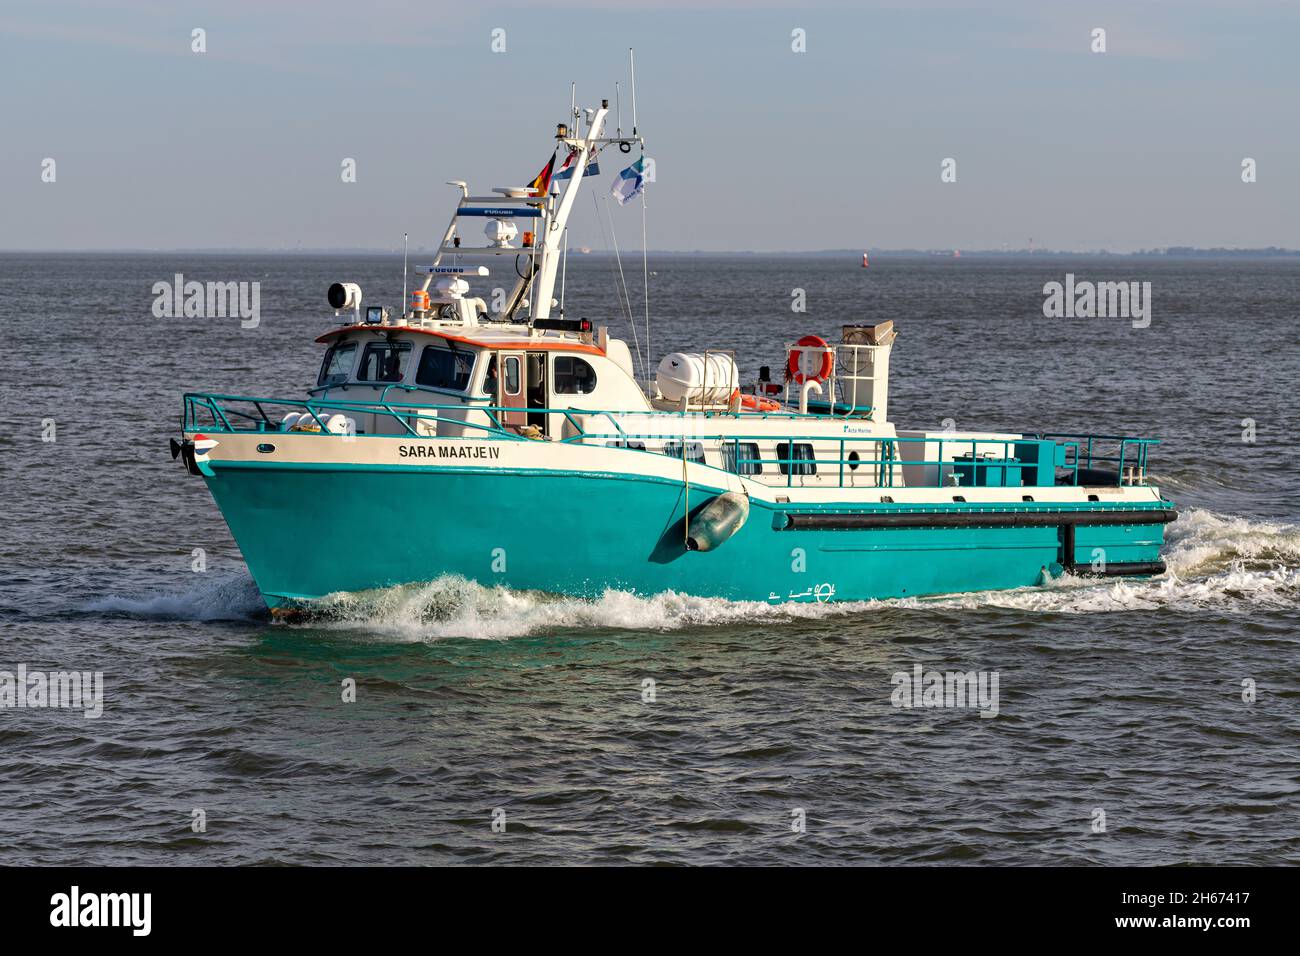 ACTA Marine Crew Tender SARA MAATJE IV sul fiume Elba Foto Stock